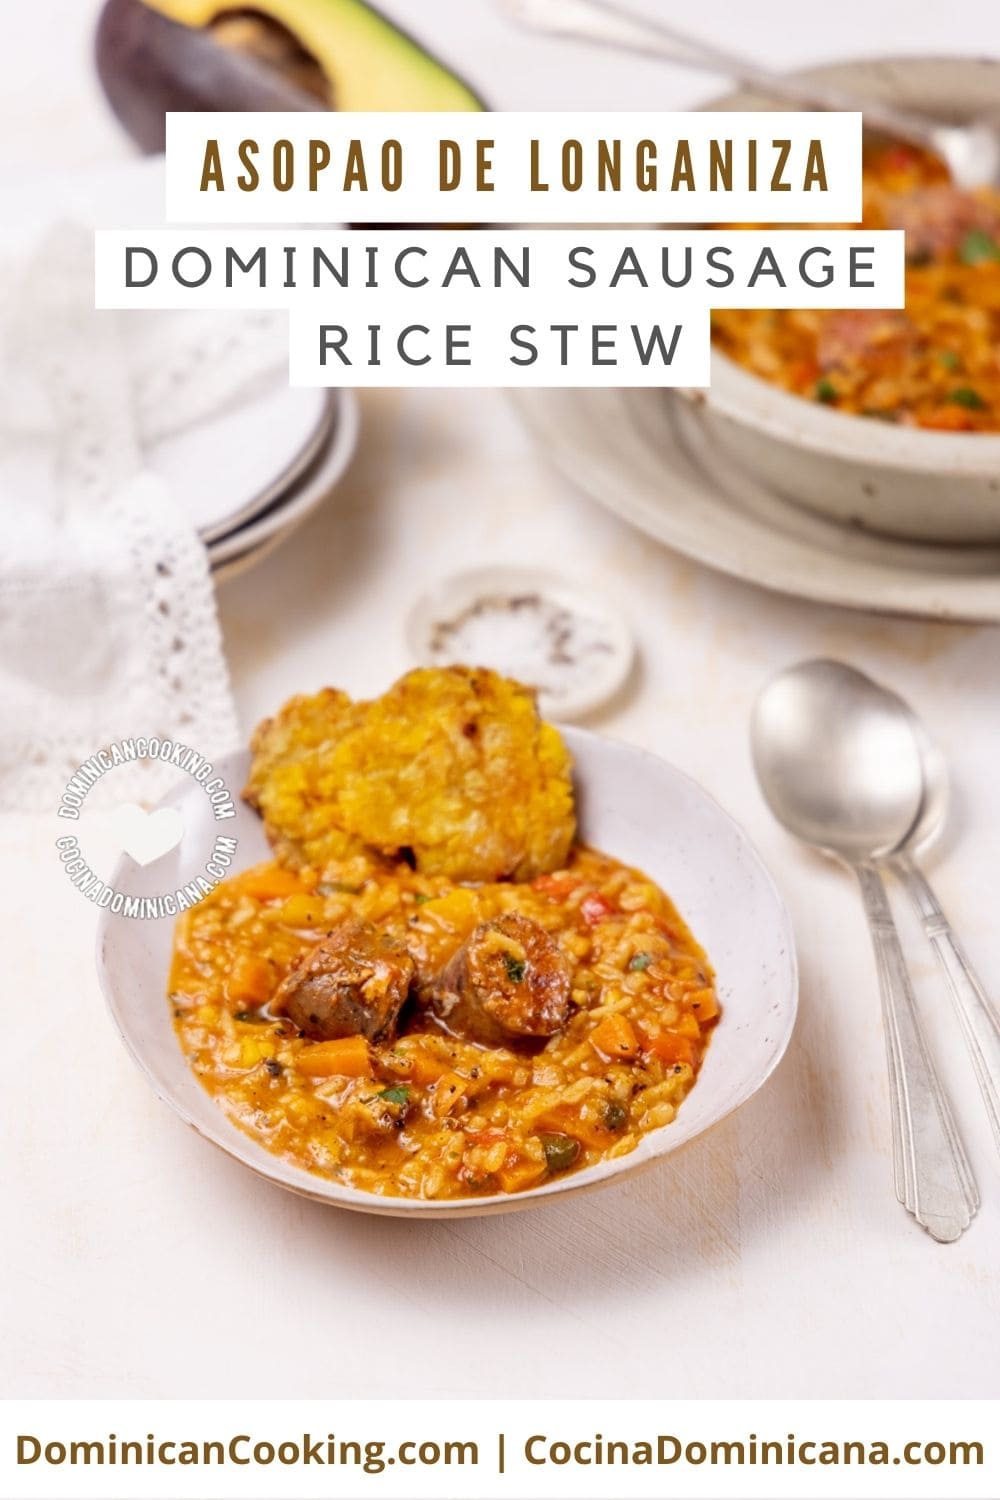 Asopao de longaniza (Dominican sausage rice stew) recipe.